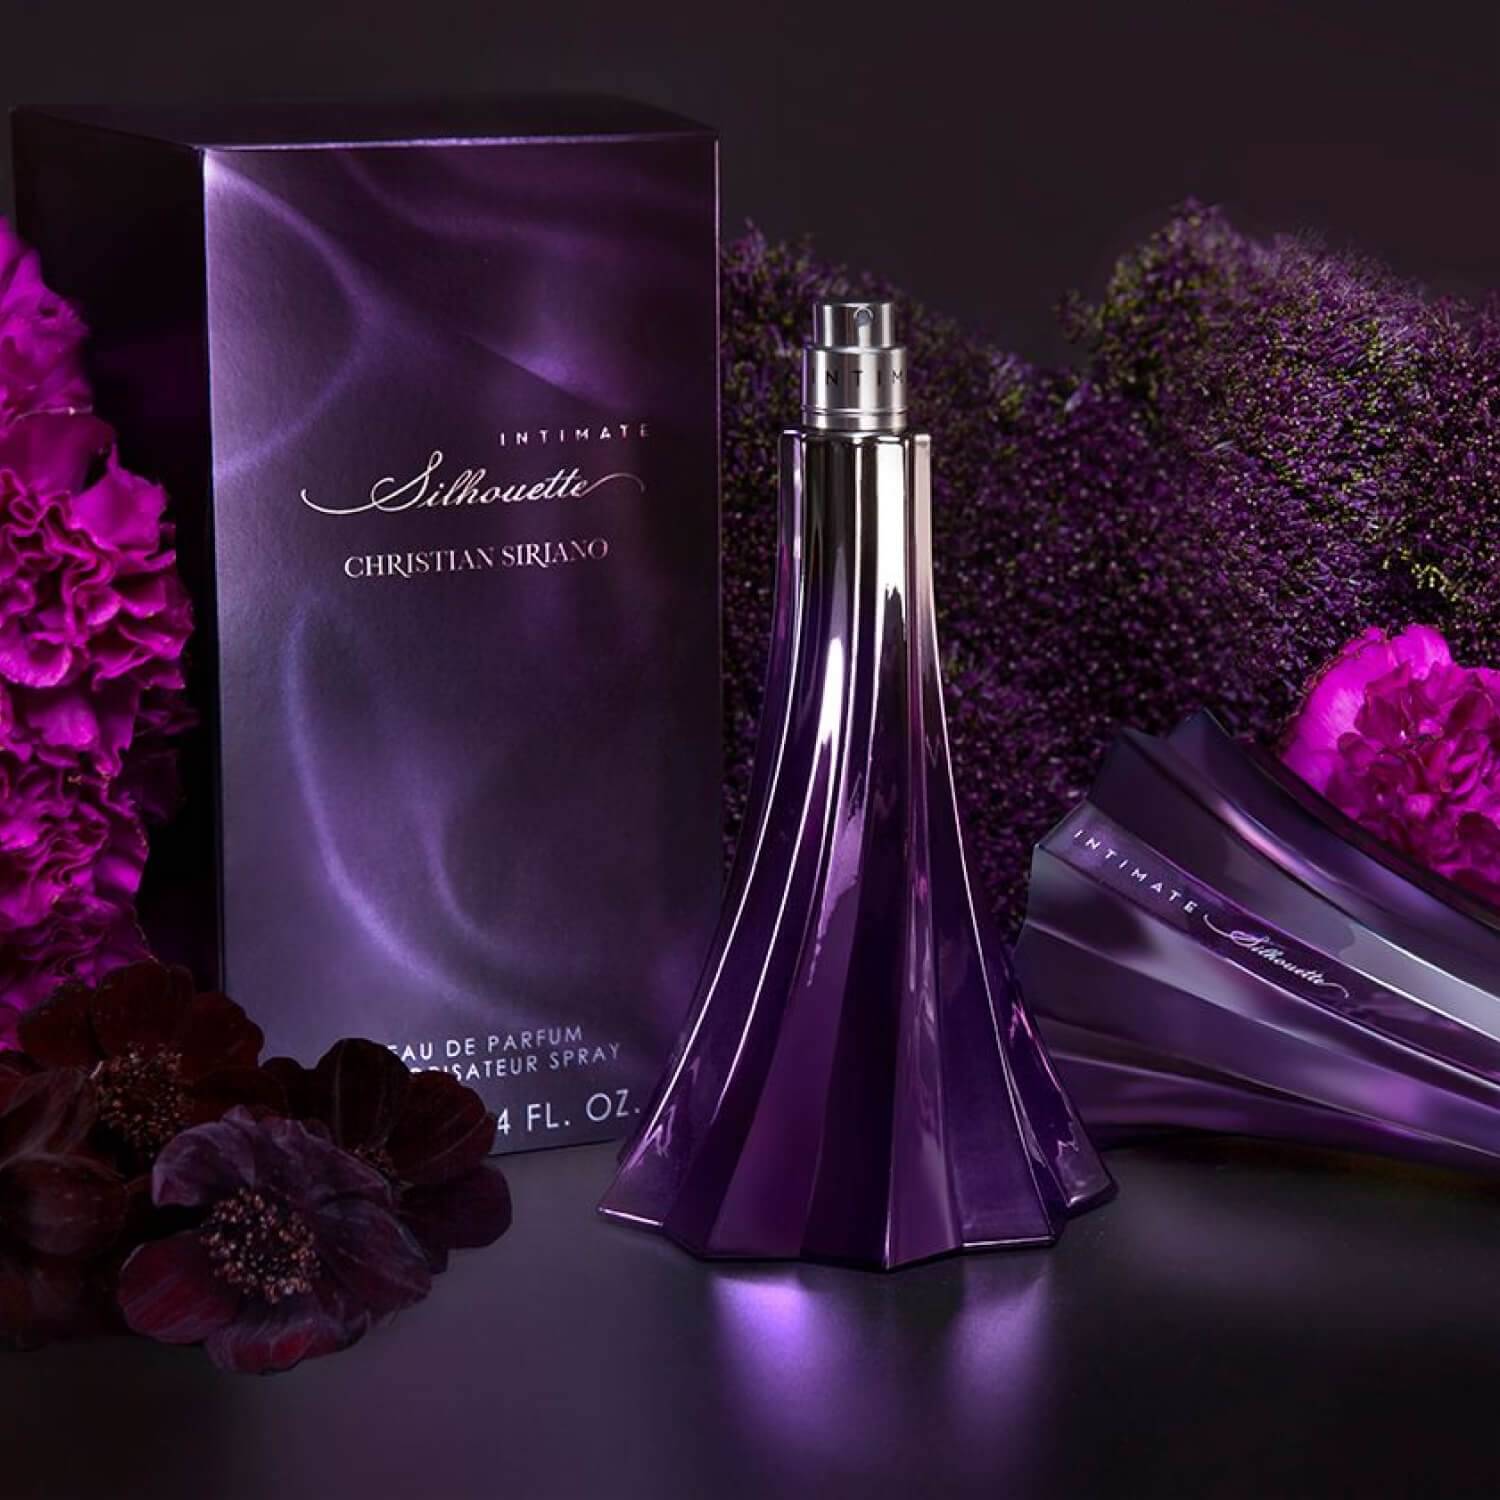 Get Christian Siriano Silhouette Intimate perfume